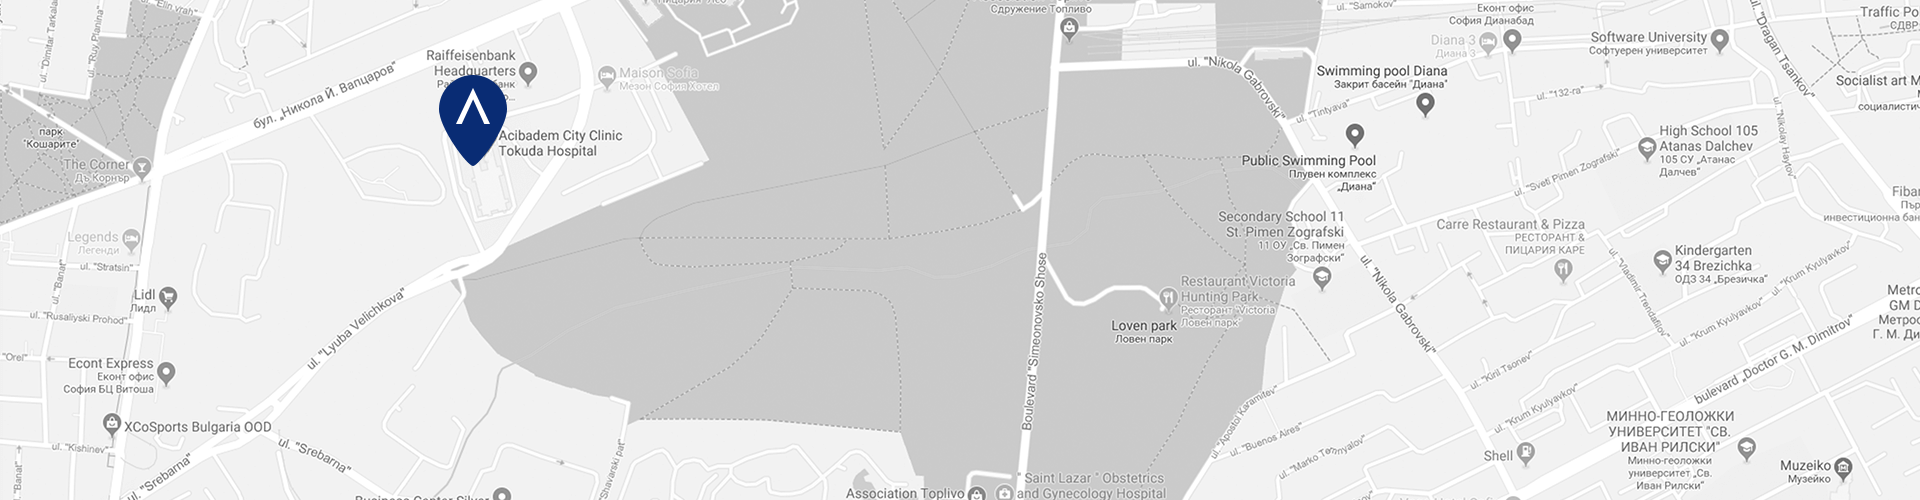 acibadem-city-clinic-tokuda-hospital-google-maps-image.png